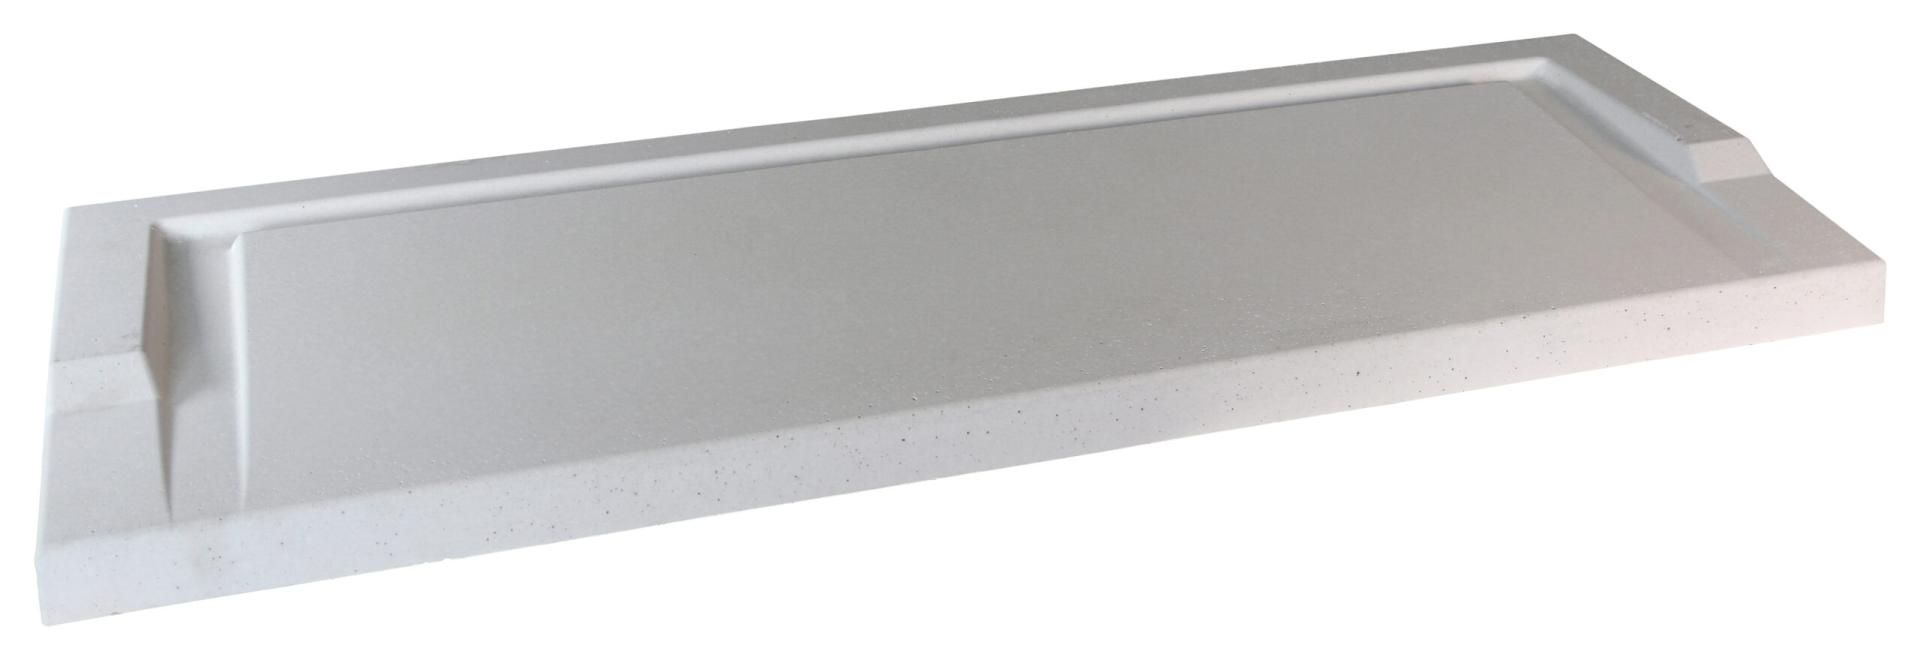 seuil-beton-pmr-lisse-35cm-120-130-daulouede-blanc-0